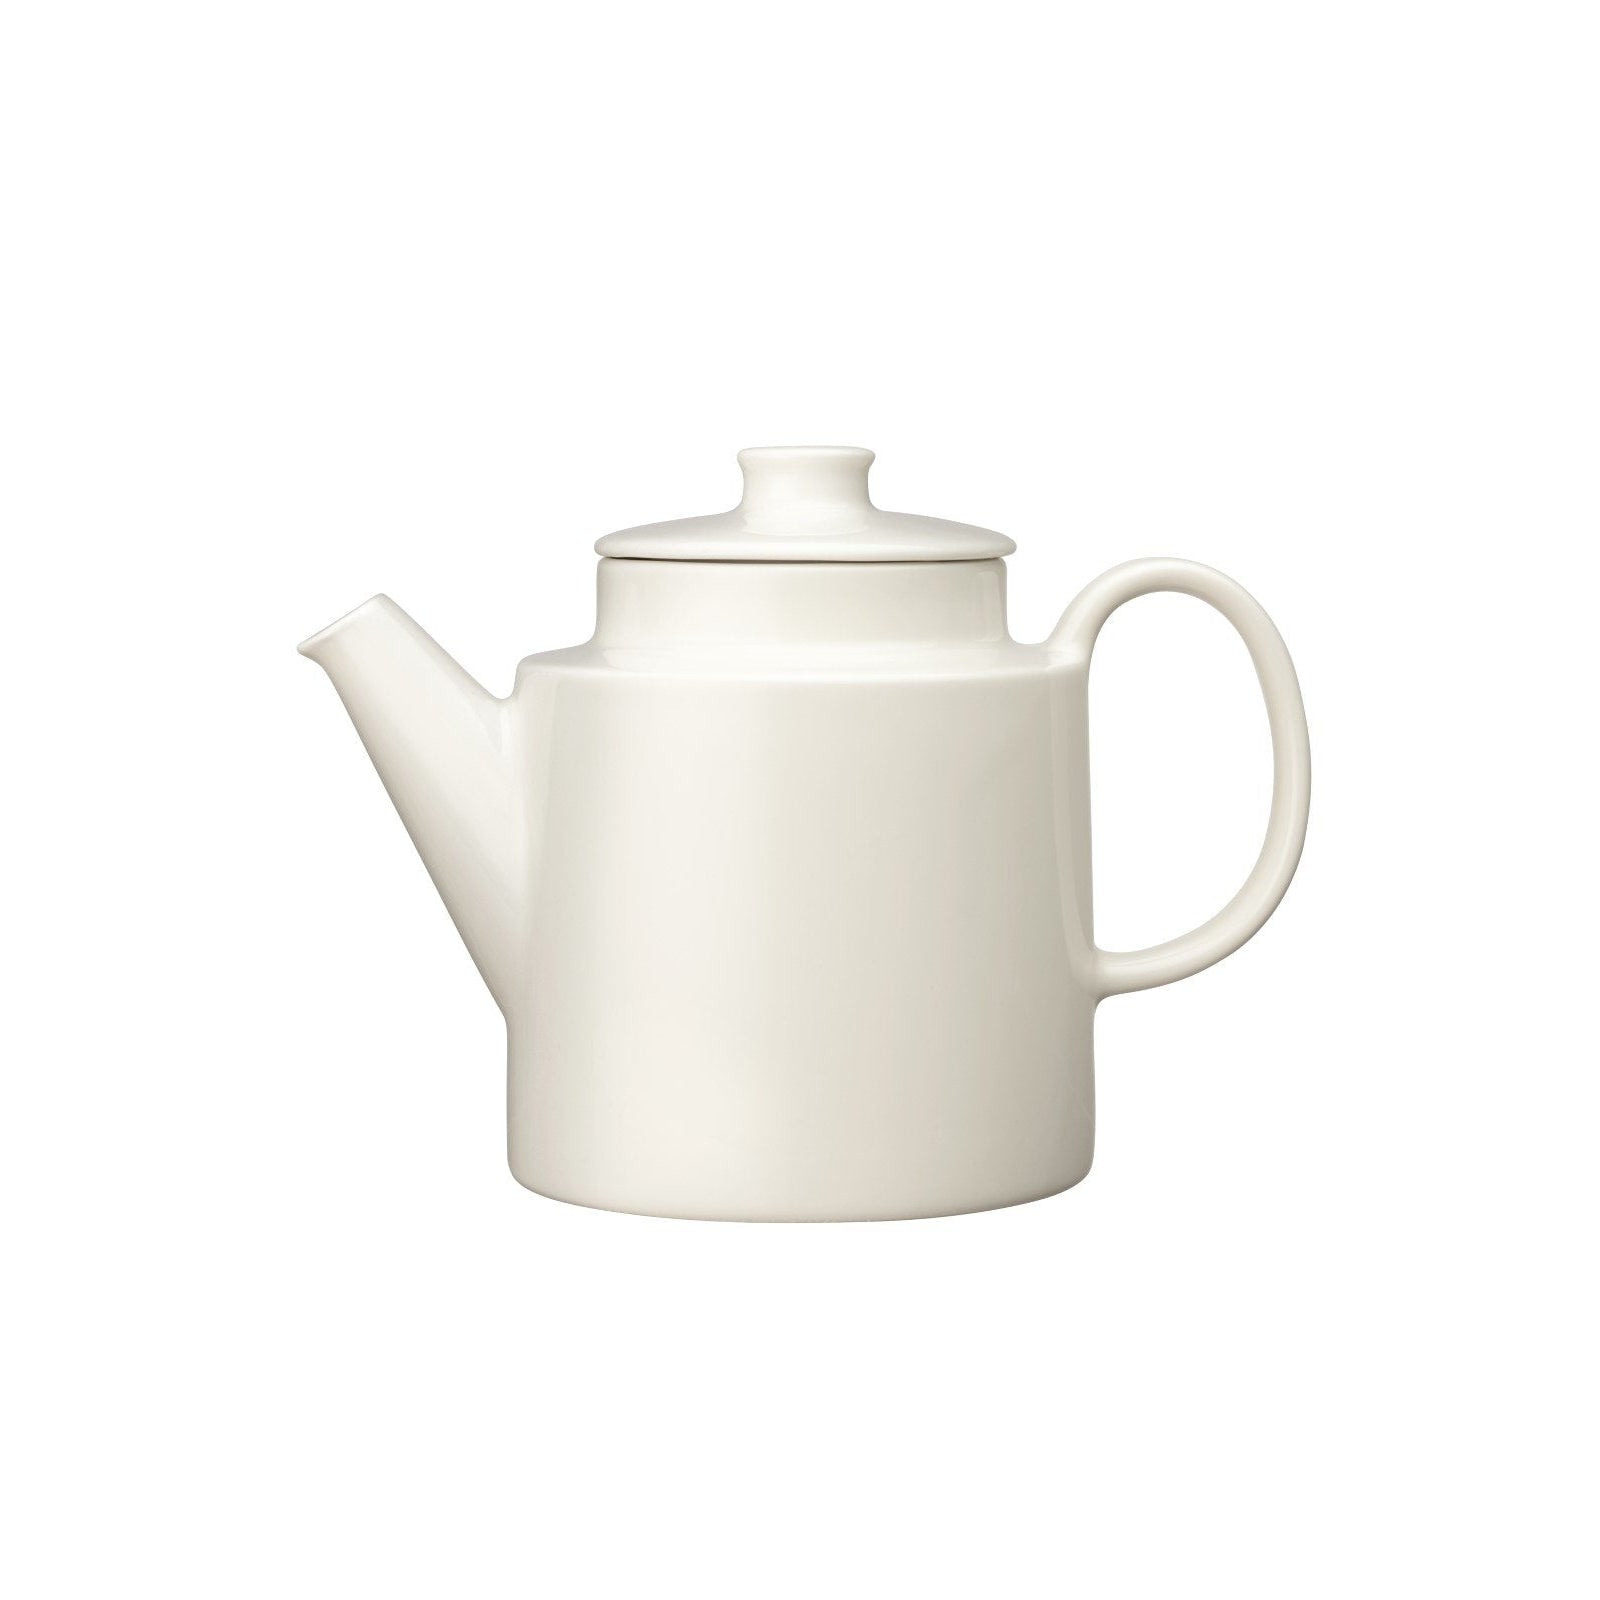 Iittala Teema Teapot White, 1 L